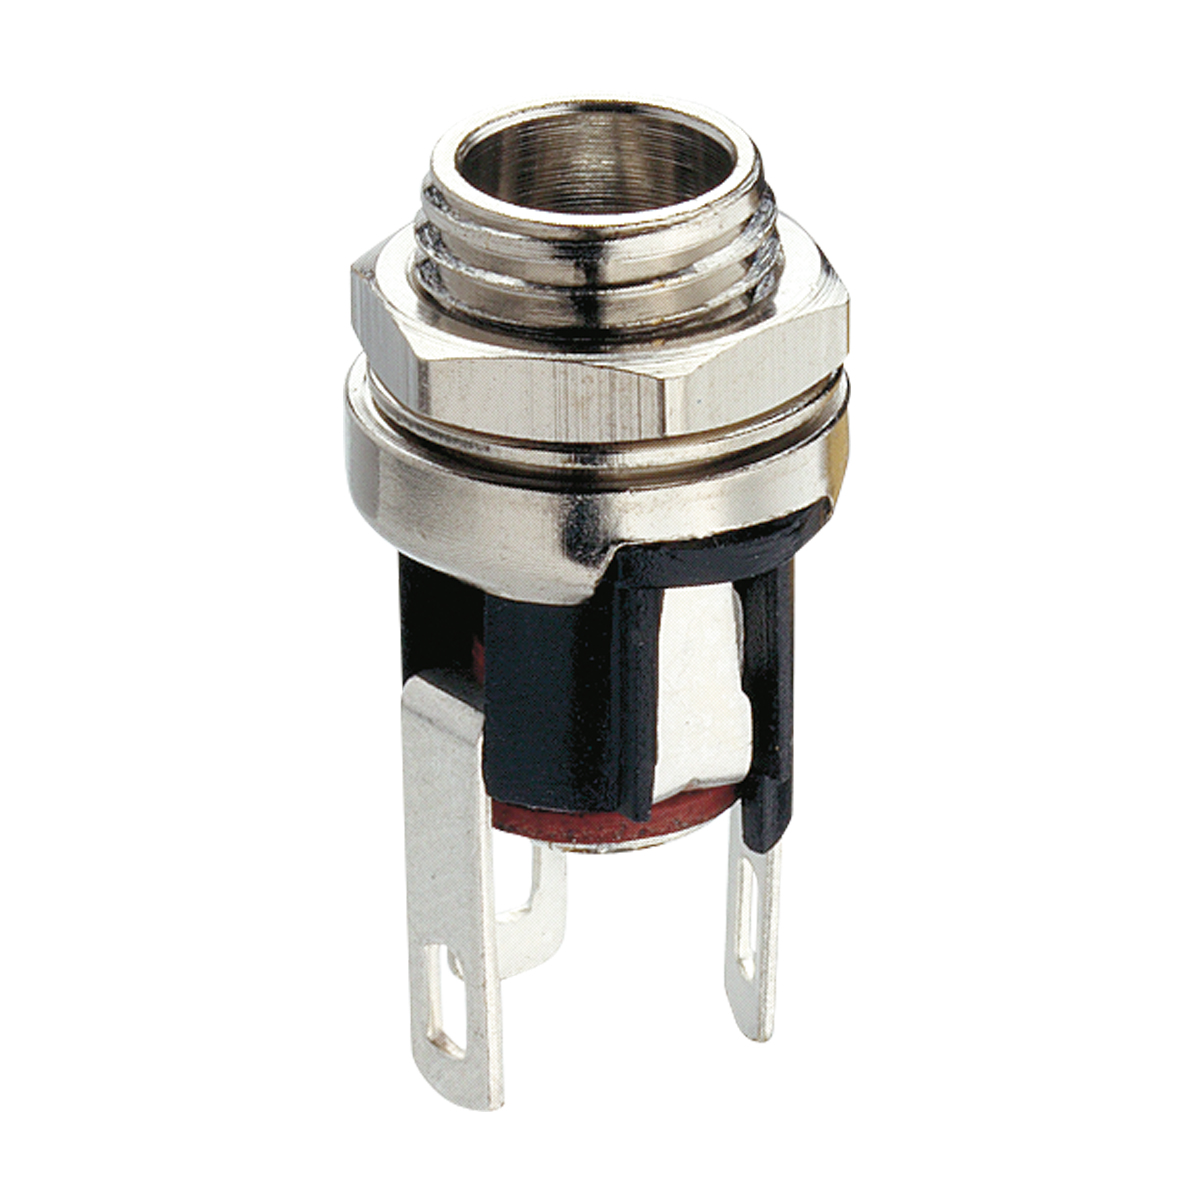 Lumberg: 1614 15 (Series 16 | Power supply connectors)